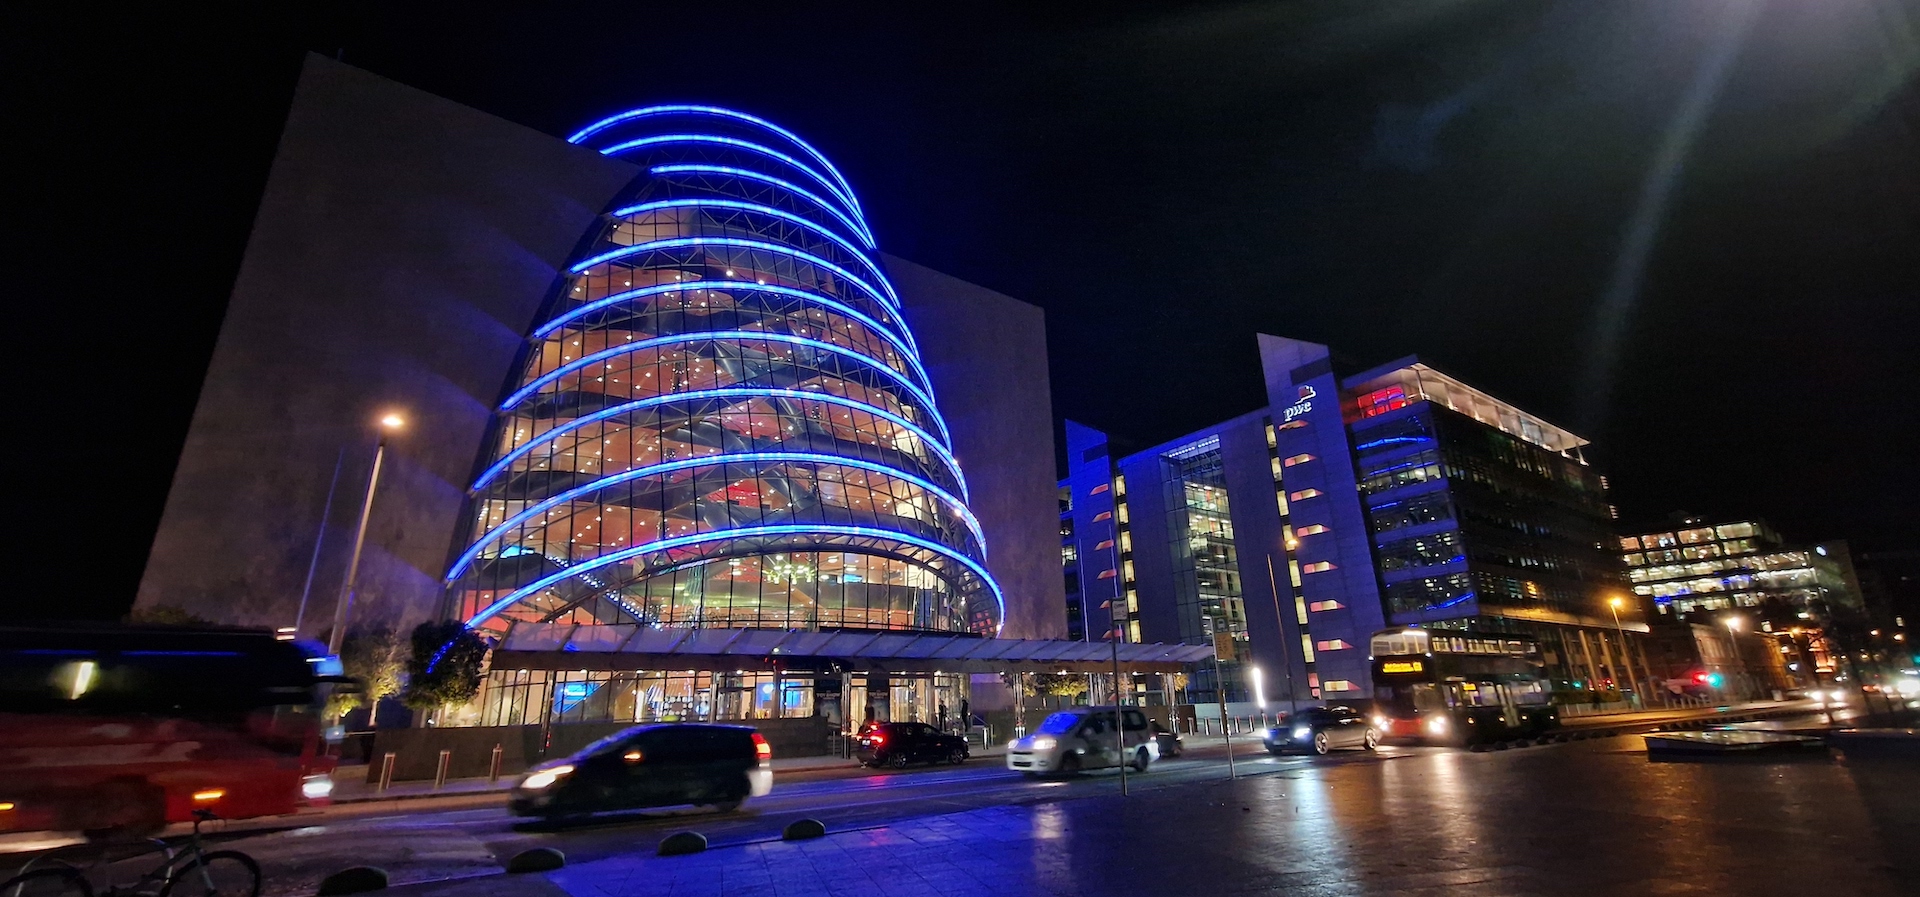 Dublin International Convention Centre: Where Business Meets Culture